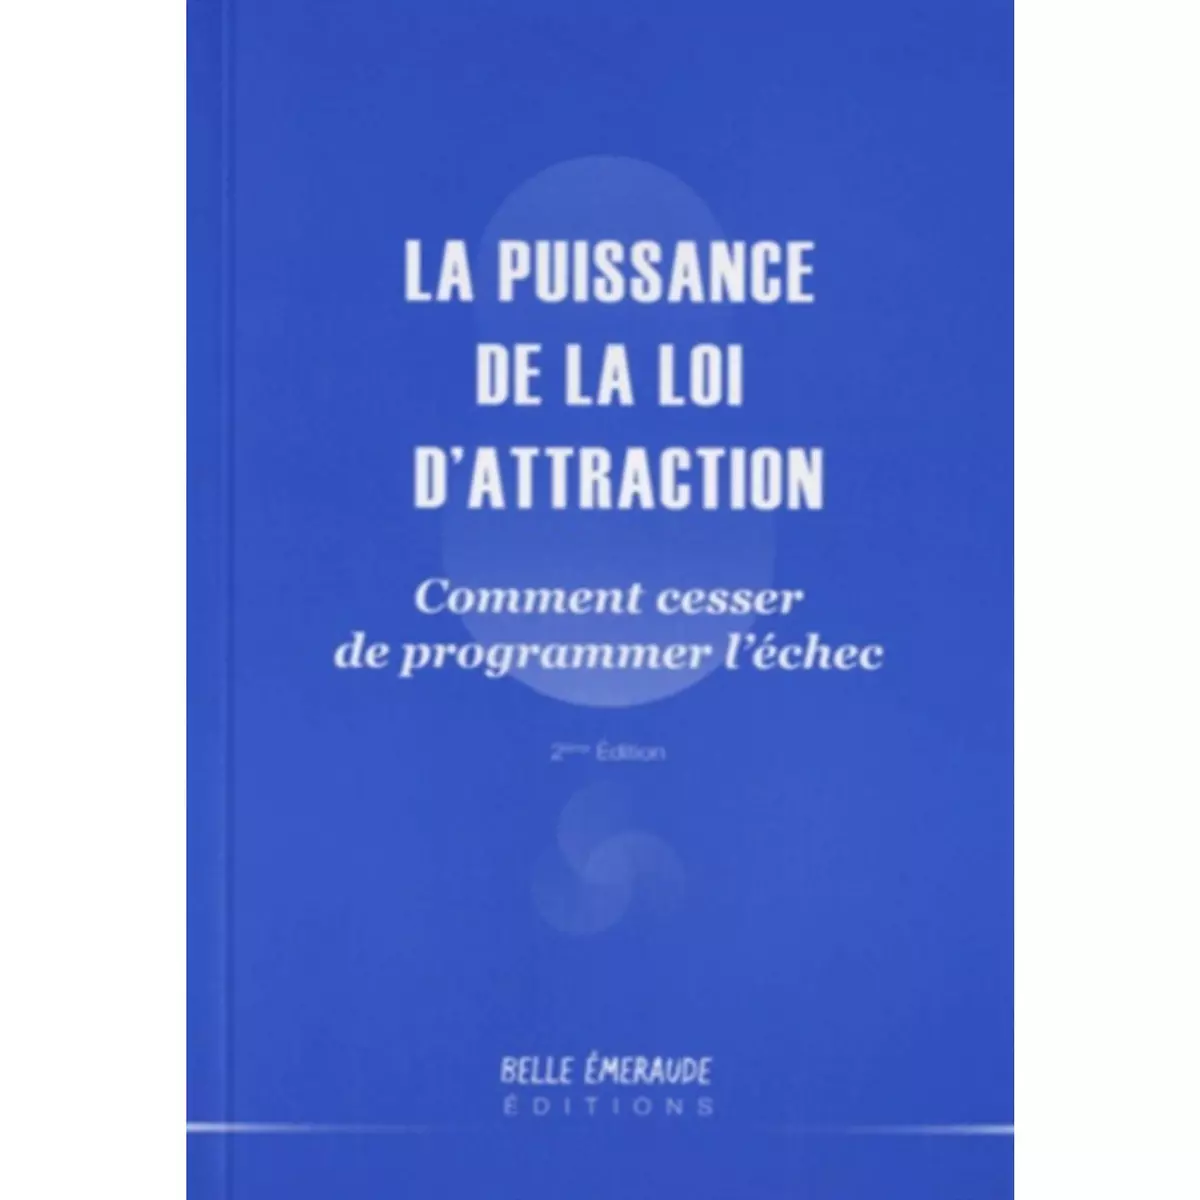  LA PUISSANCE DE LA LOI D'ATTRACTION. 2E EDITION, Dogna Michel